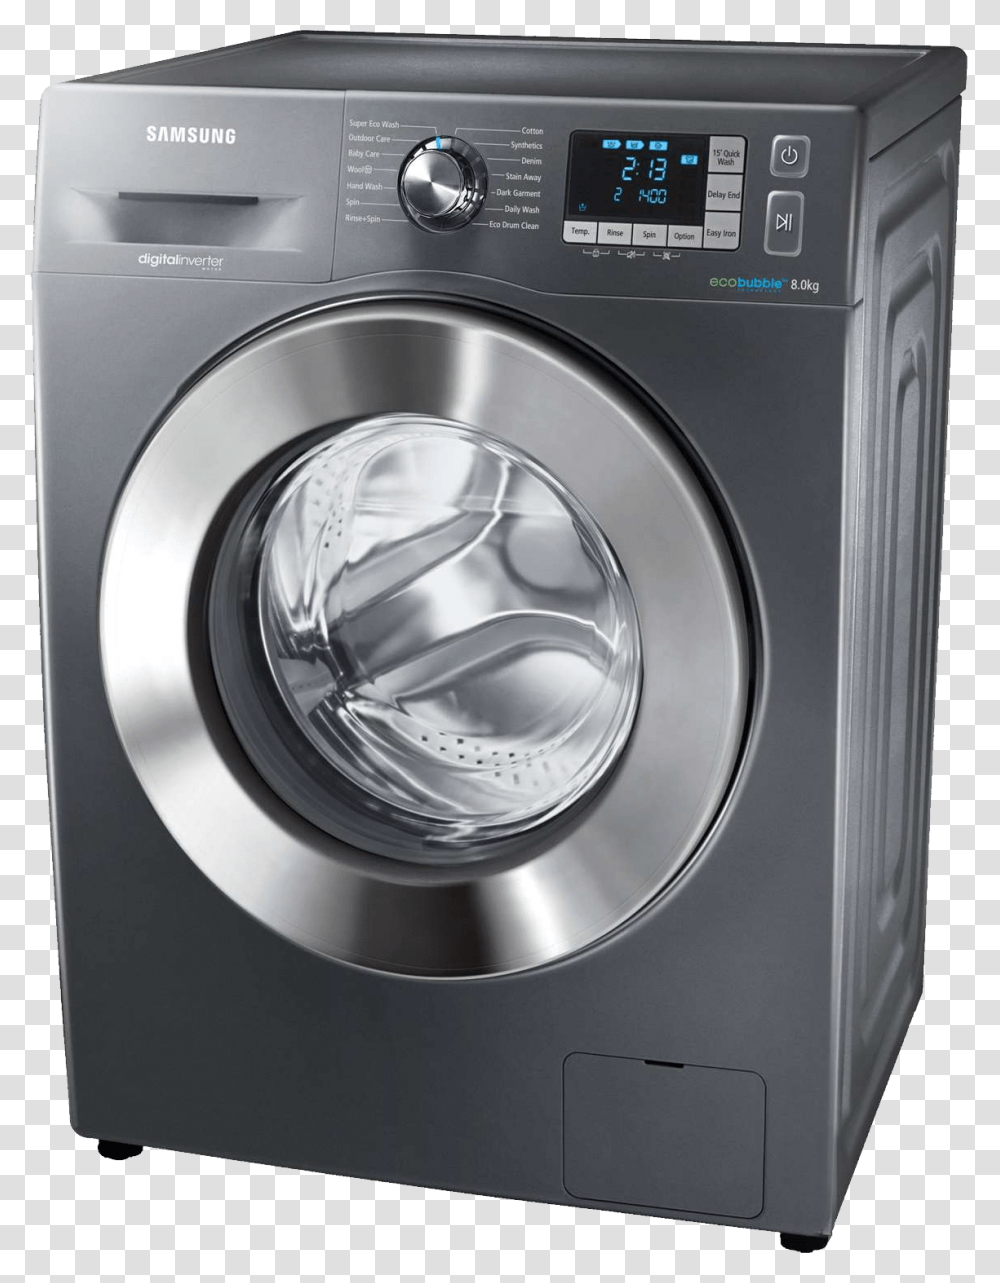 Washing Machine Images Samsung Washing Machine, Appliance, Washer, Dryer Transparent Png